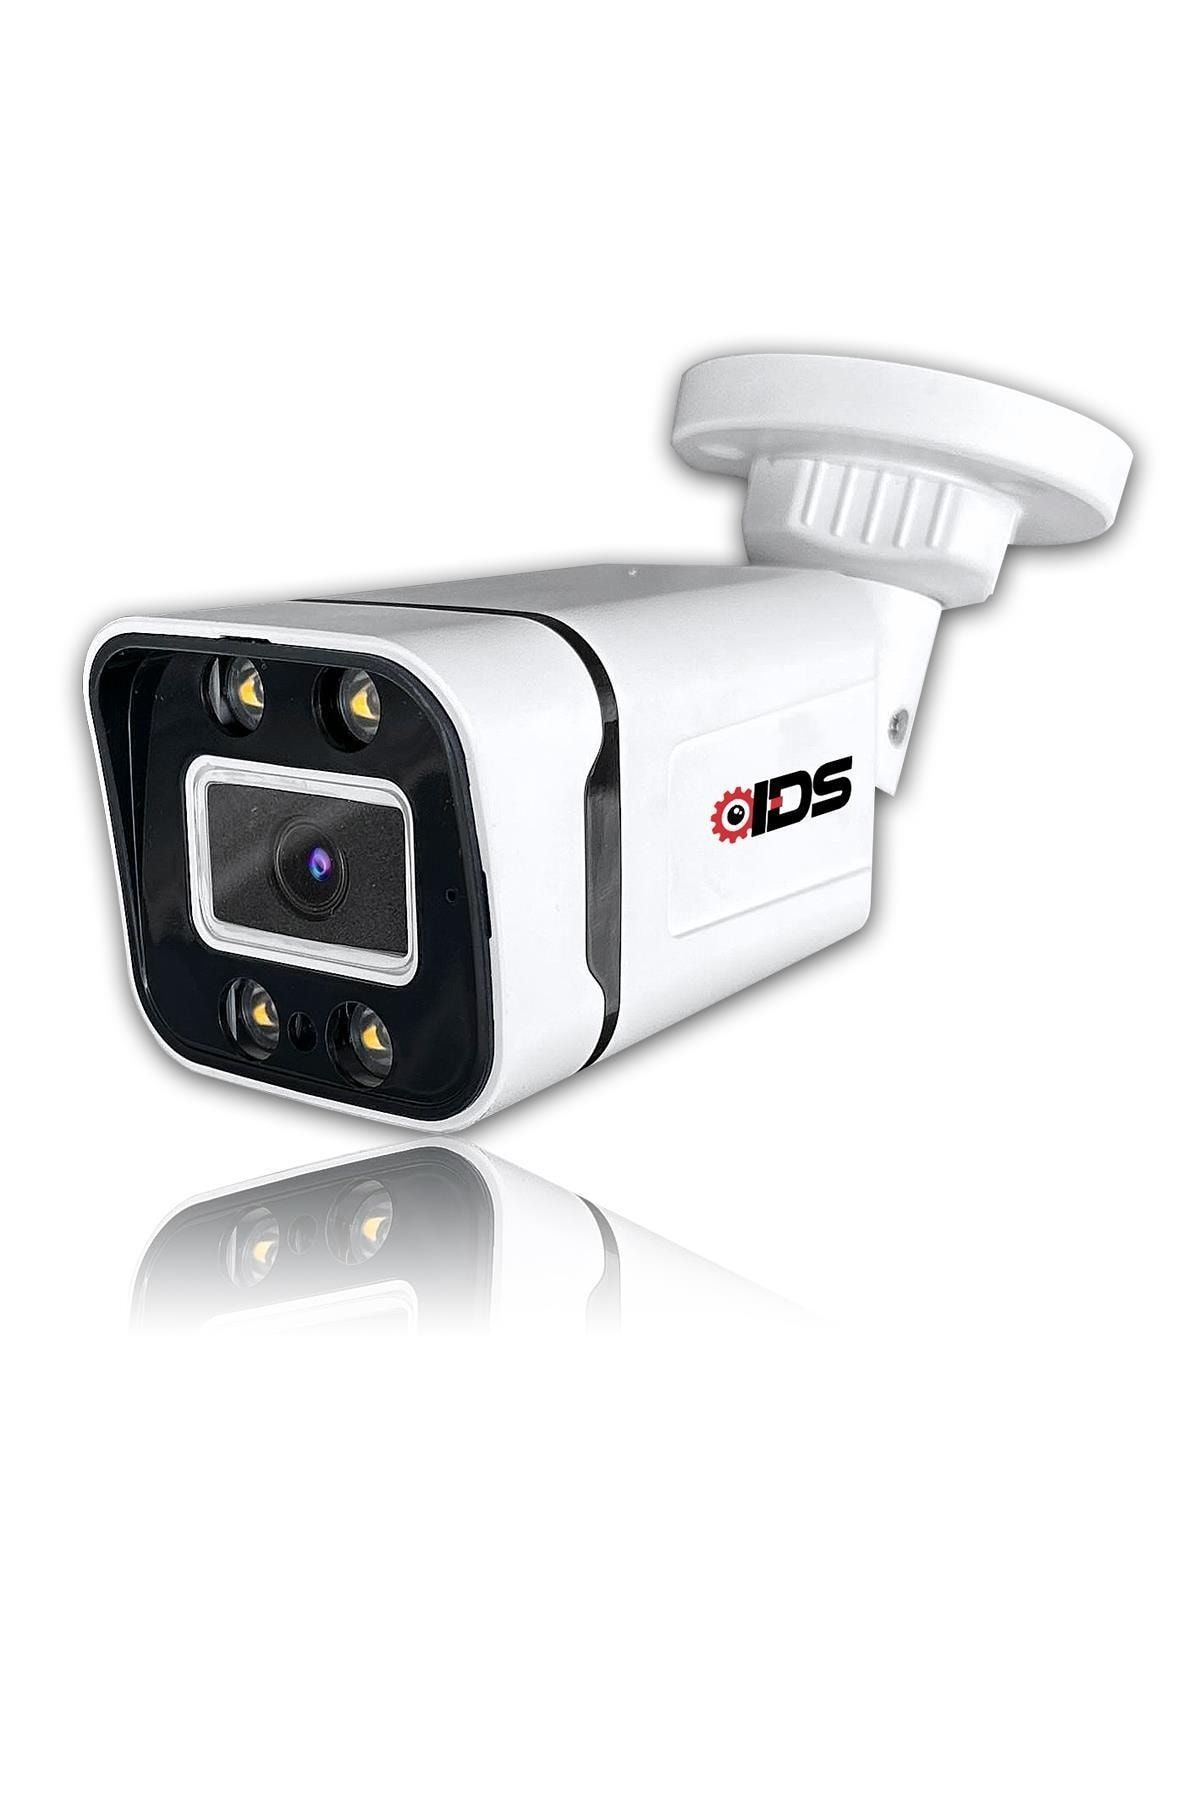 IDS - Gece Renkli - 5mp Sony Lens 1080p Fullhd Ahd Güvenlik Kamerası - 4xultra Led - Plastik Kasa